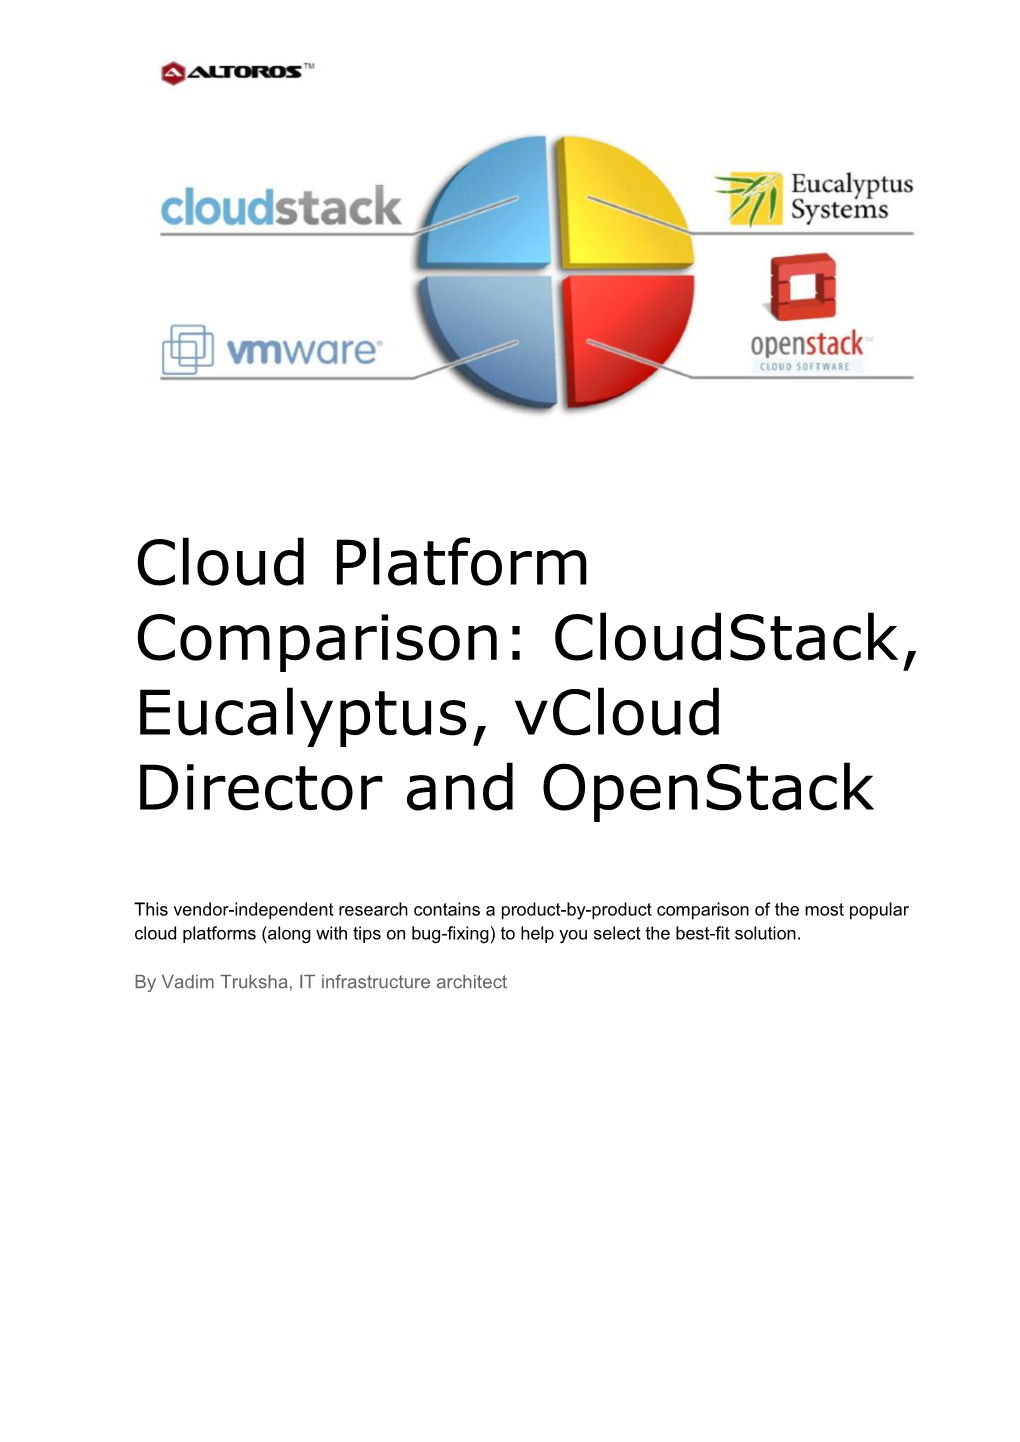 Cloud Platform Comparison: Cloudstack, Eucalyptus, Vcloud Director and Openstack